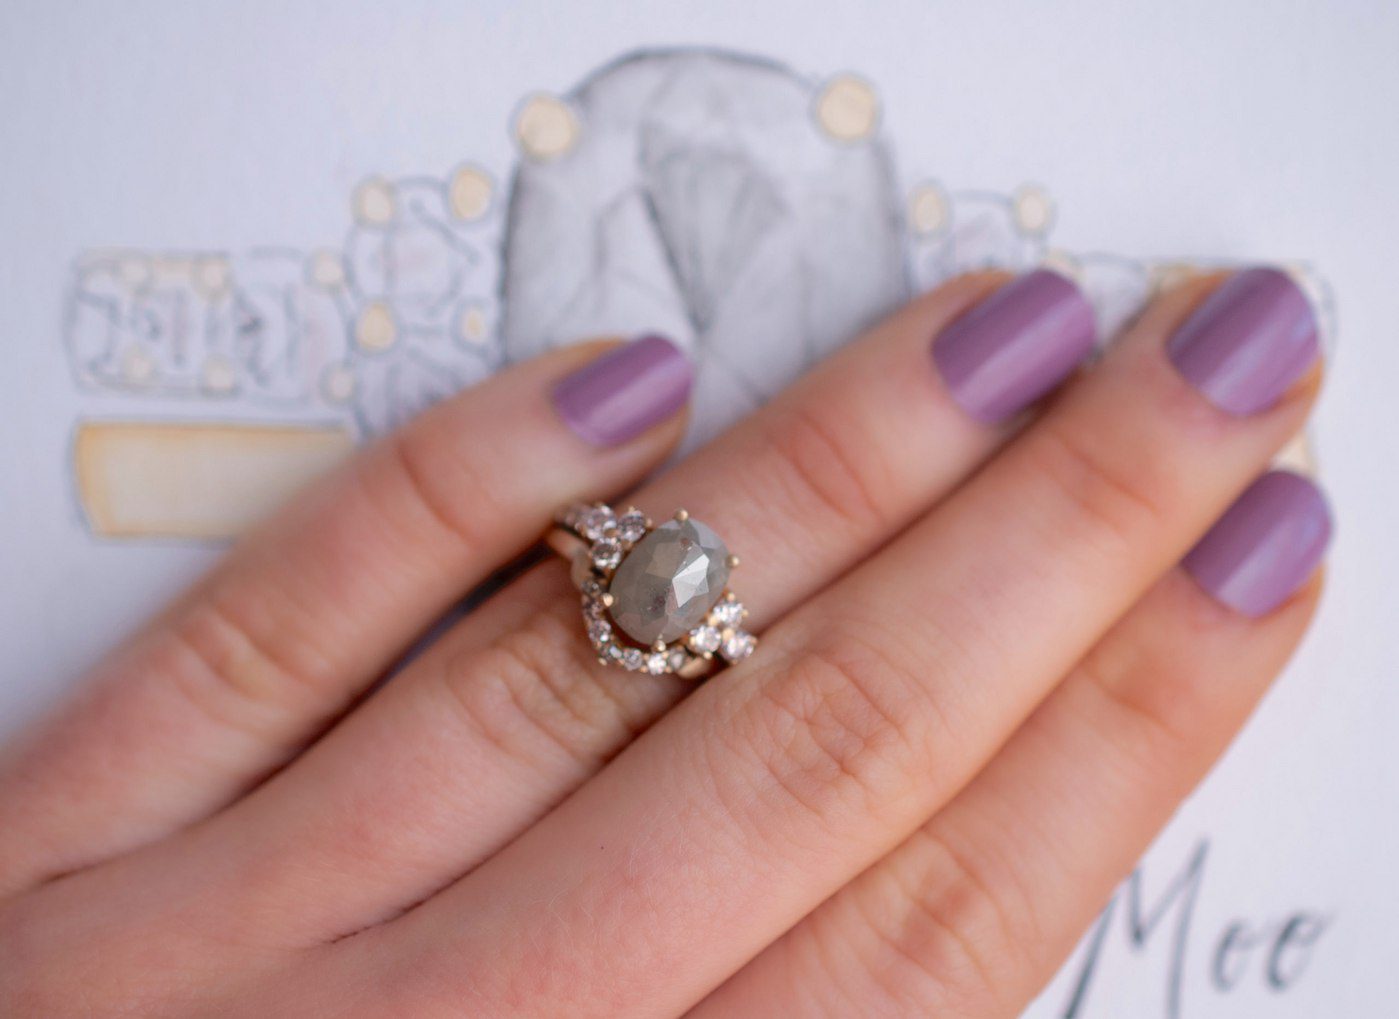 Lab Grown Diamond Engagement Rings - MiaDonna